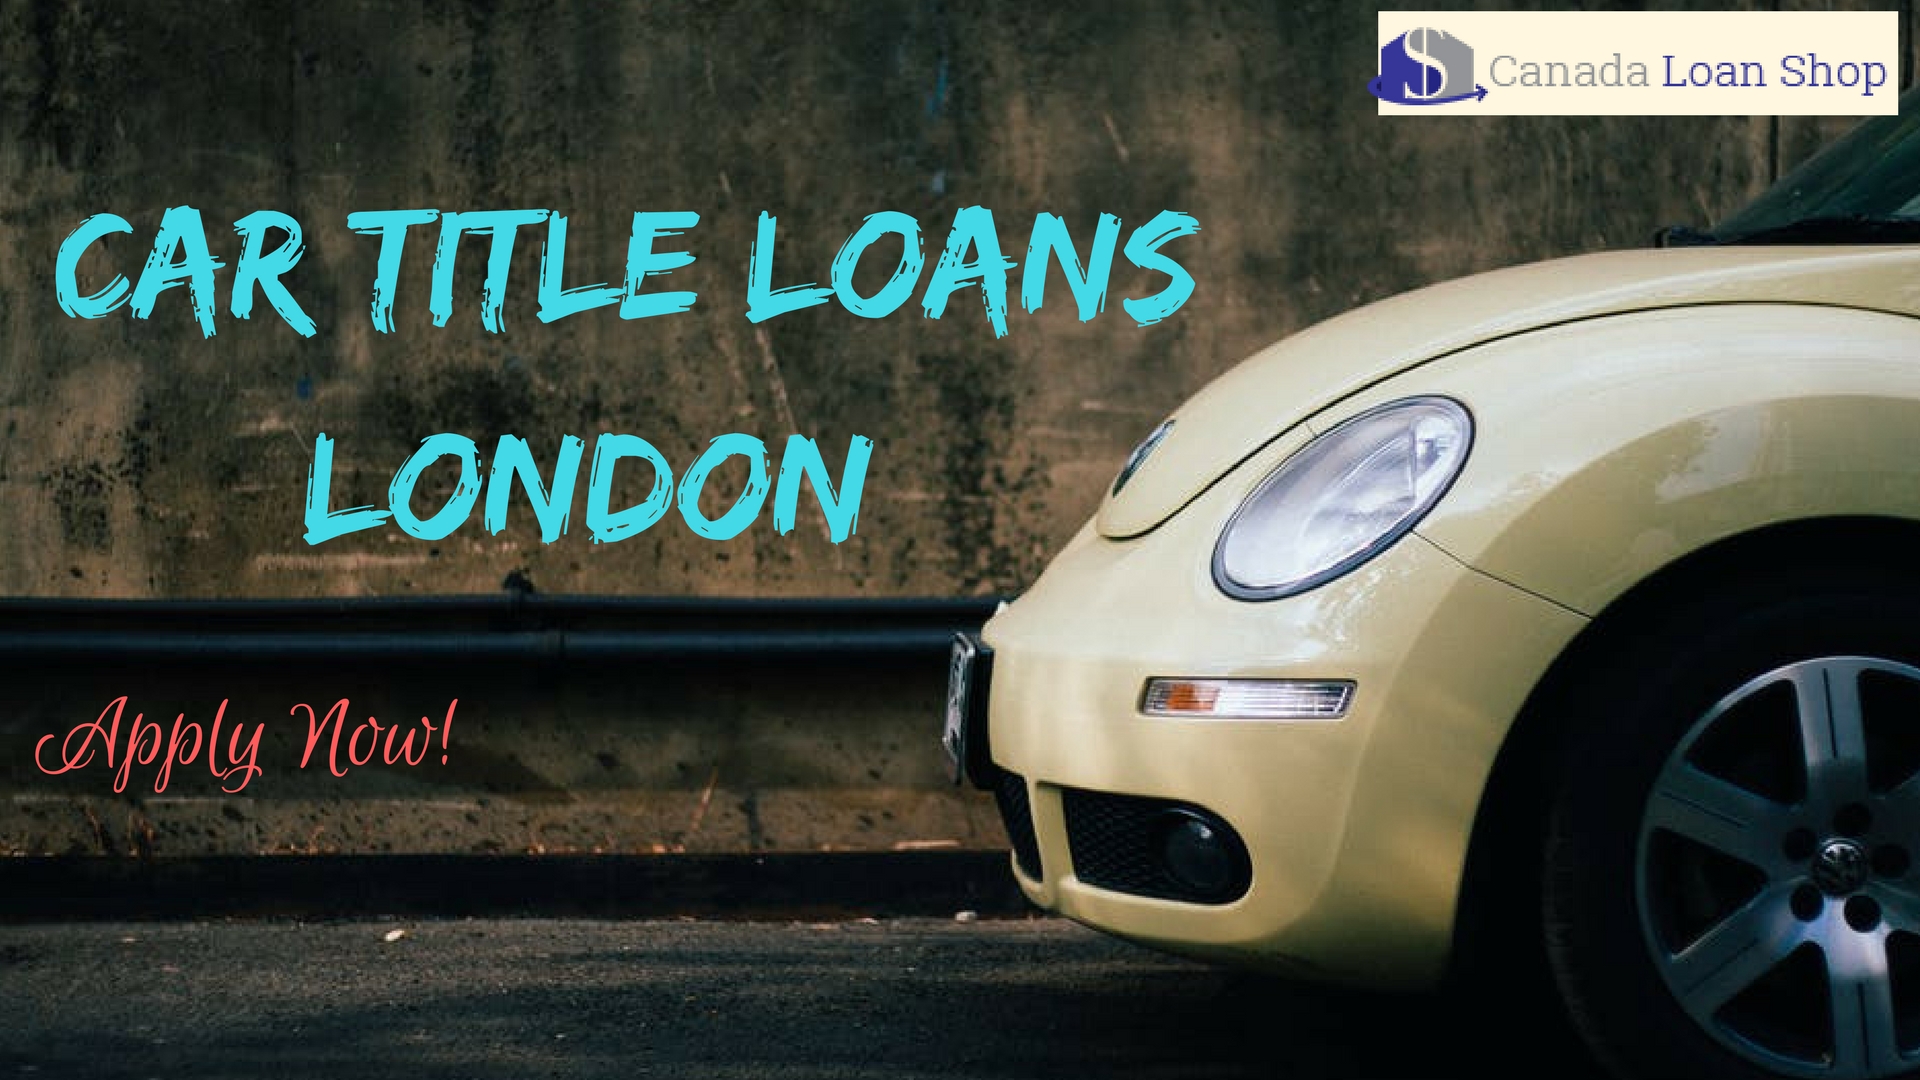 Car Title Loans London